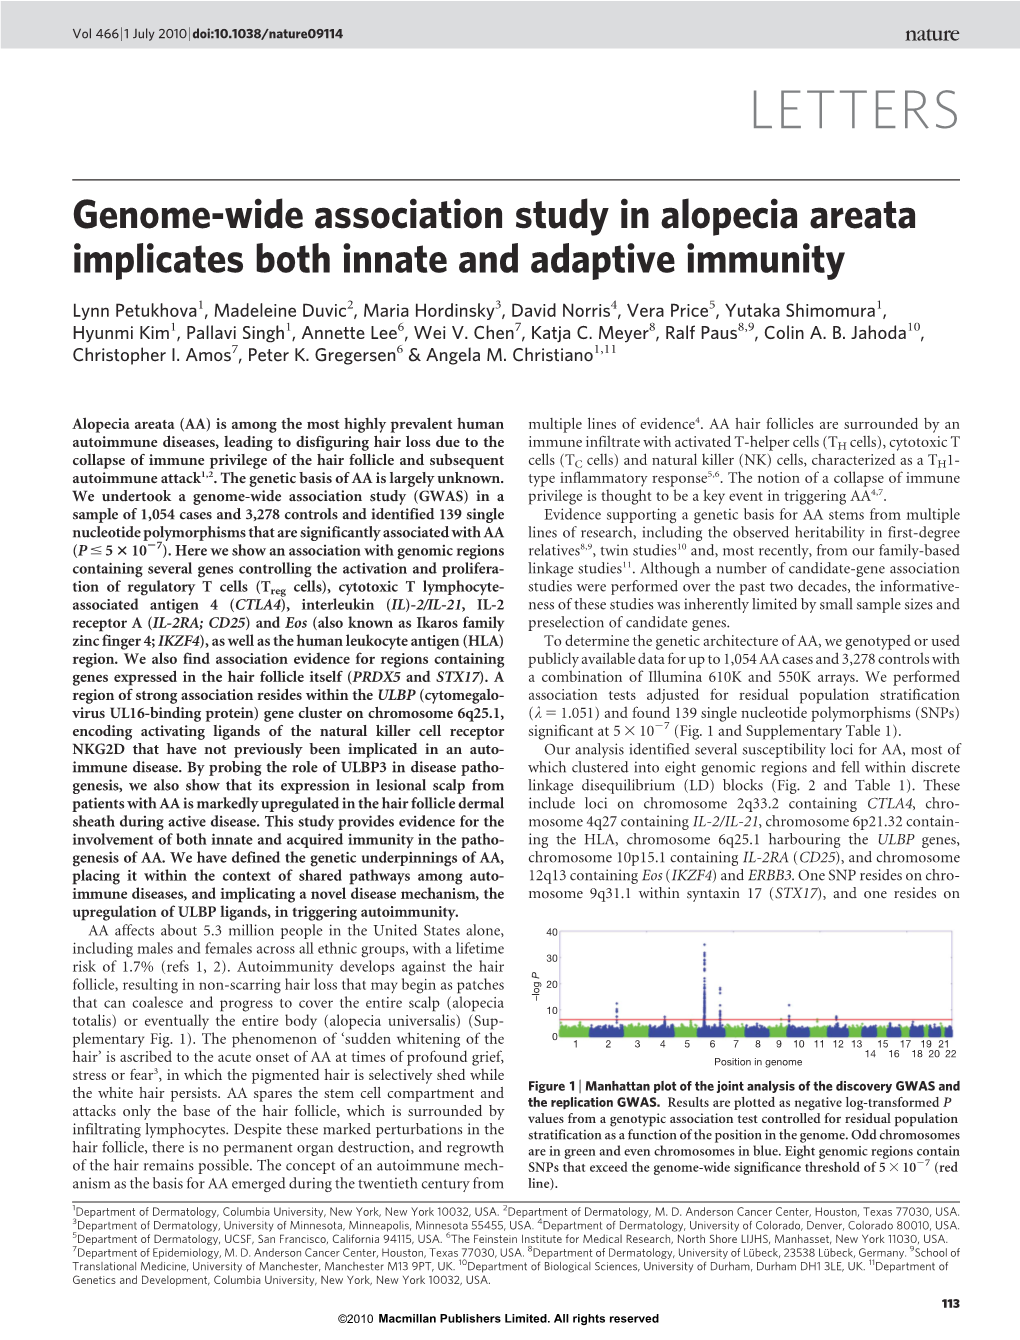 Genome-Wide Association Study in Alopecia Areata Implicates Both Innate and Adaptive Immunity